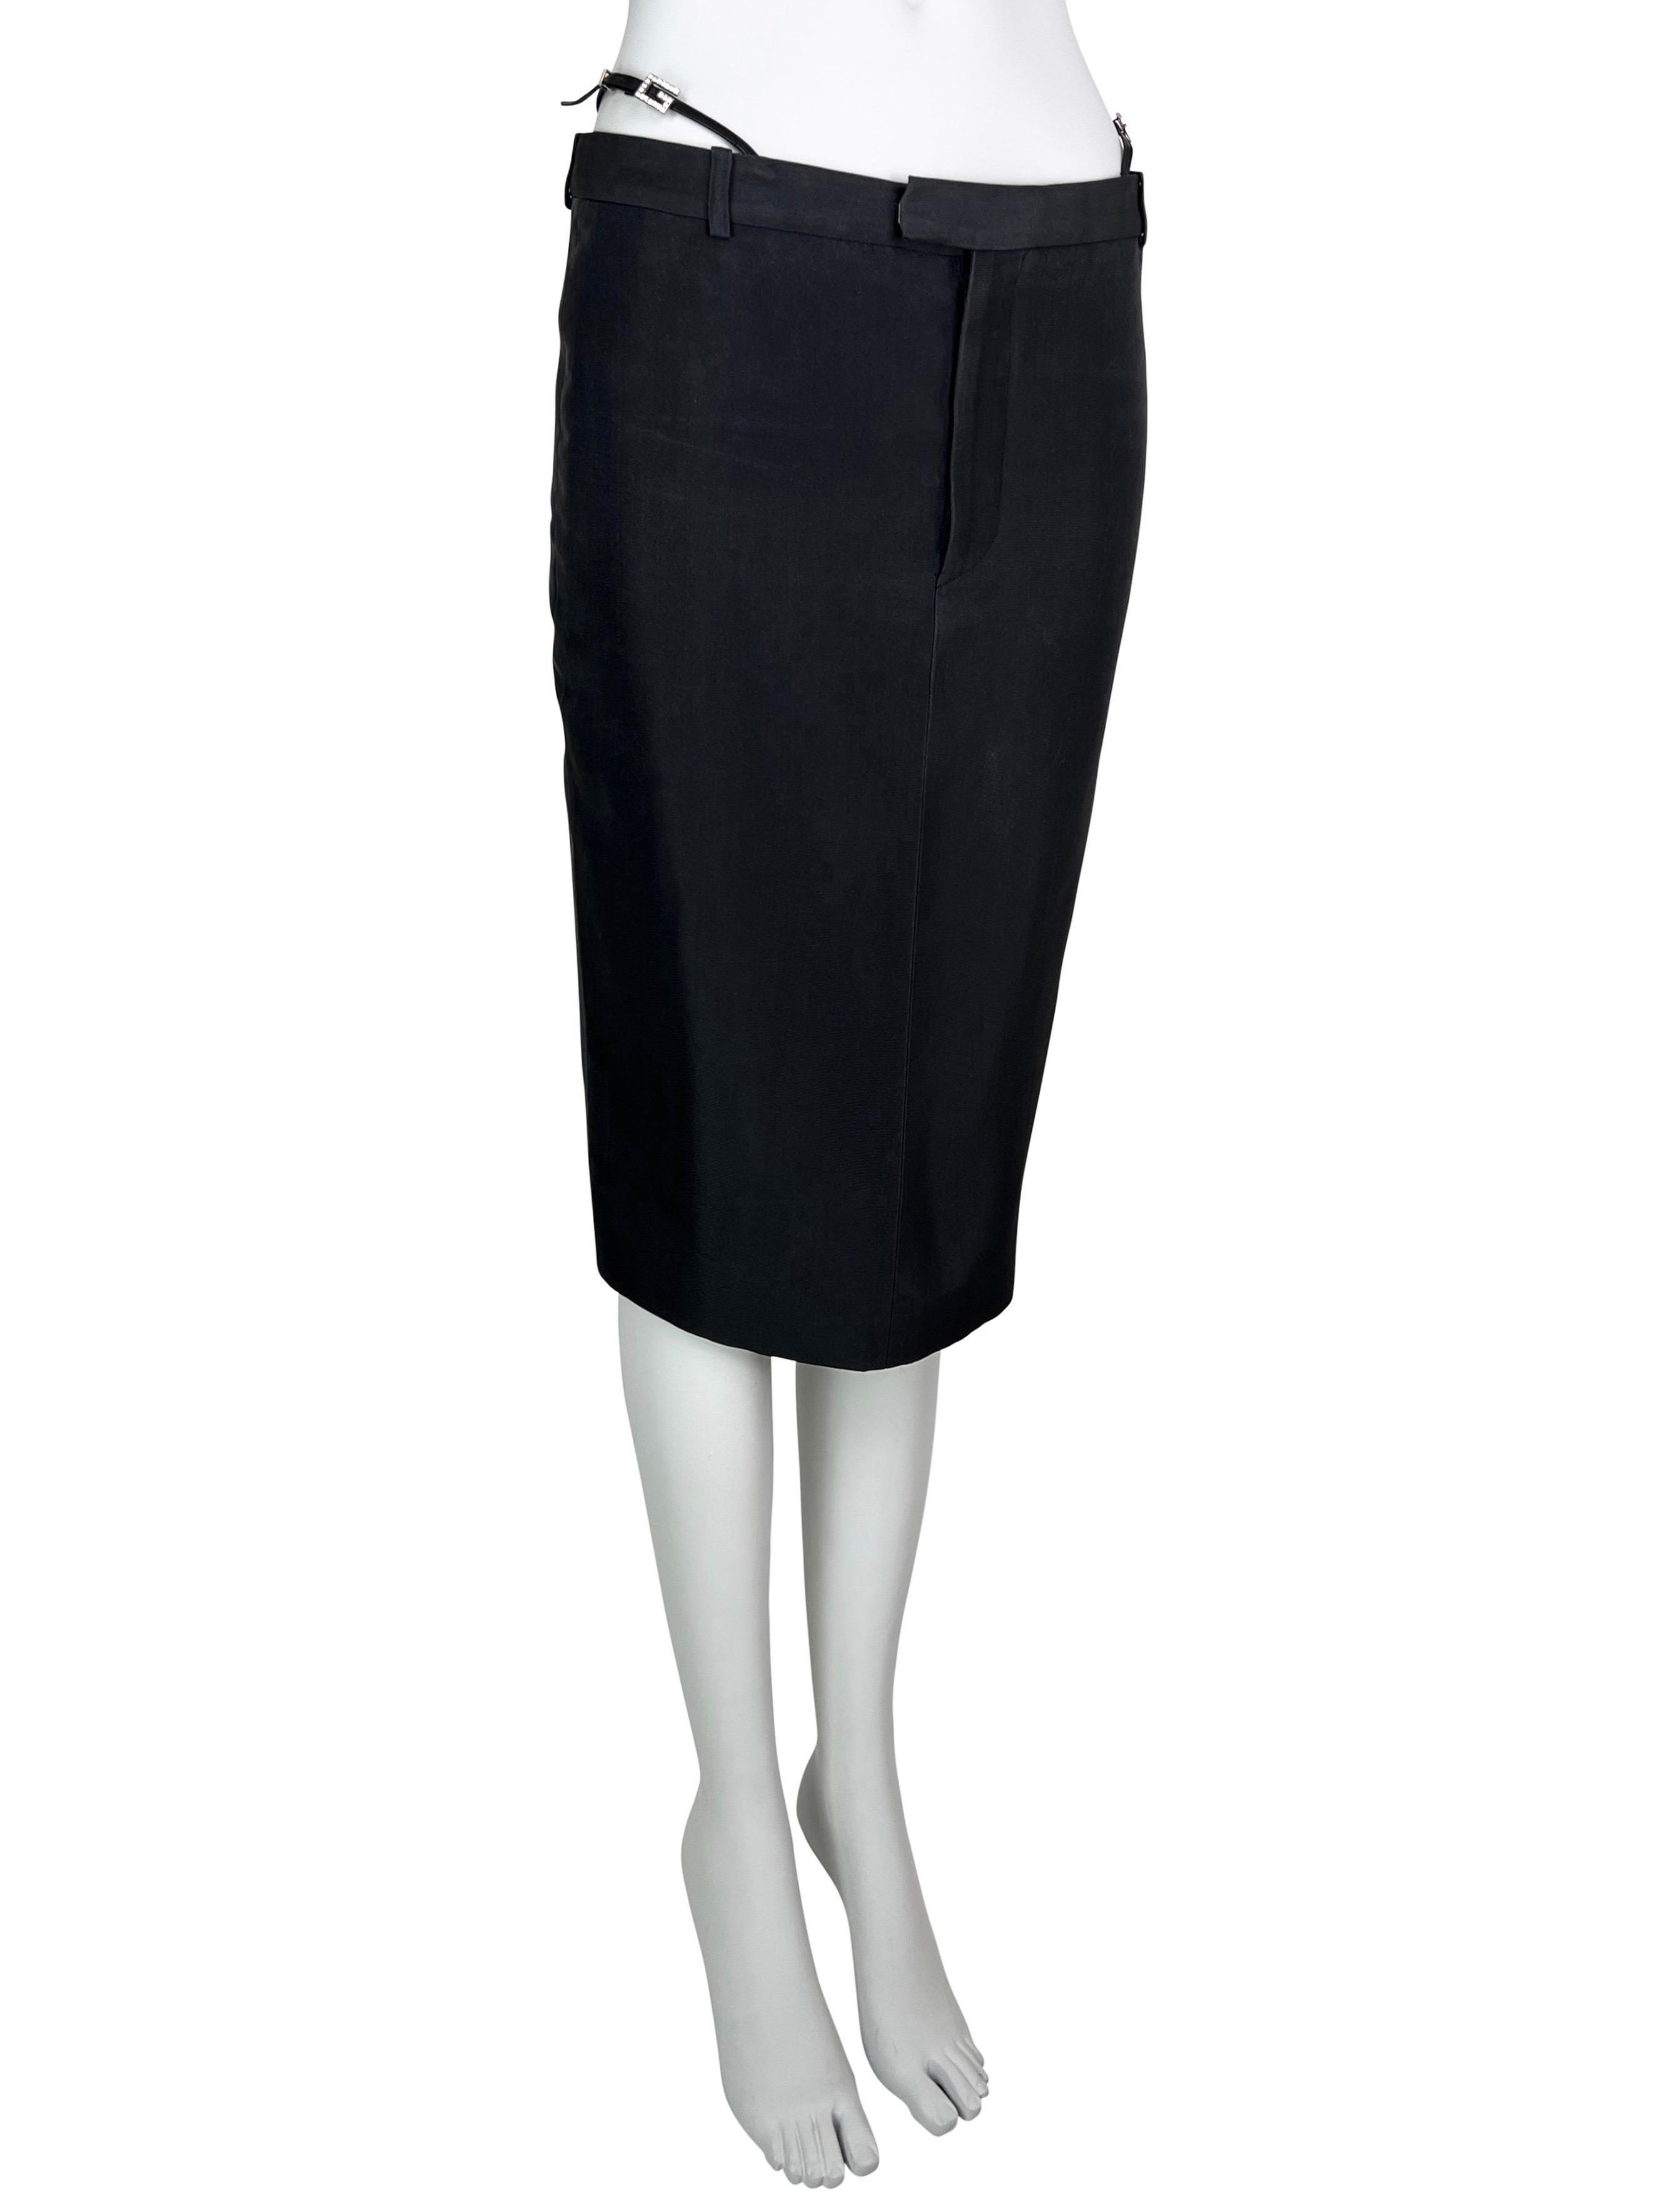 Gucci by Tom Ford Spring 1998 Swarovski Logo G-string Silk Pencil Skirt For Sale 7